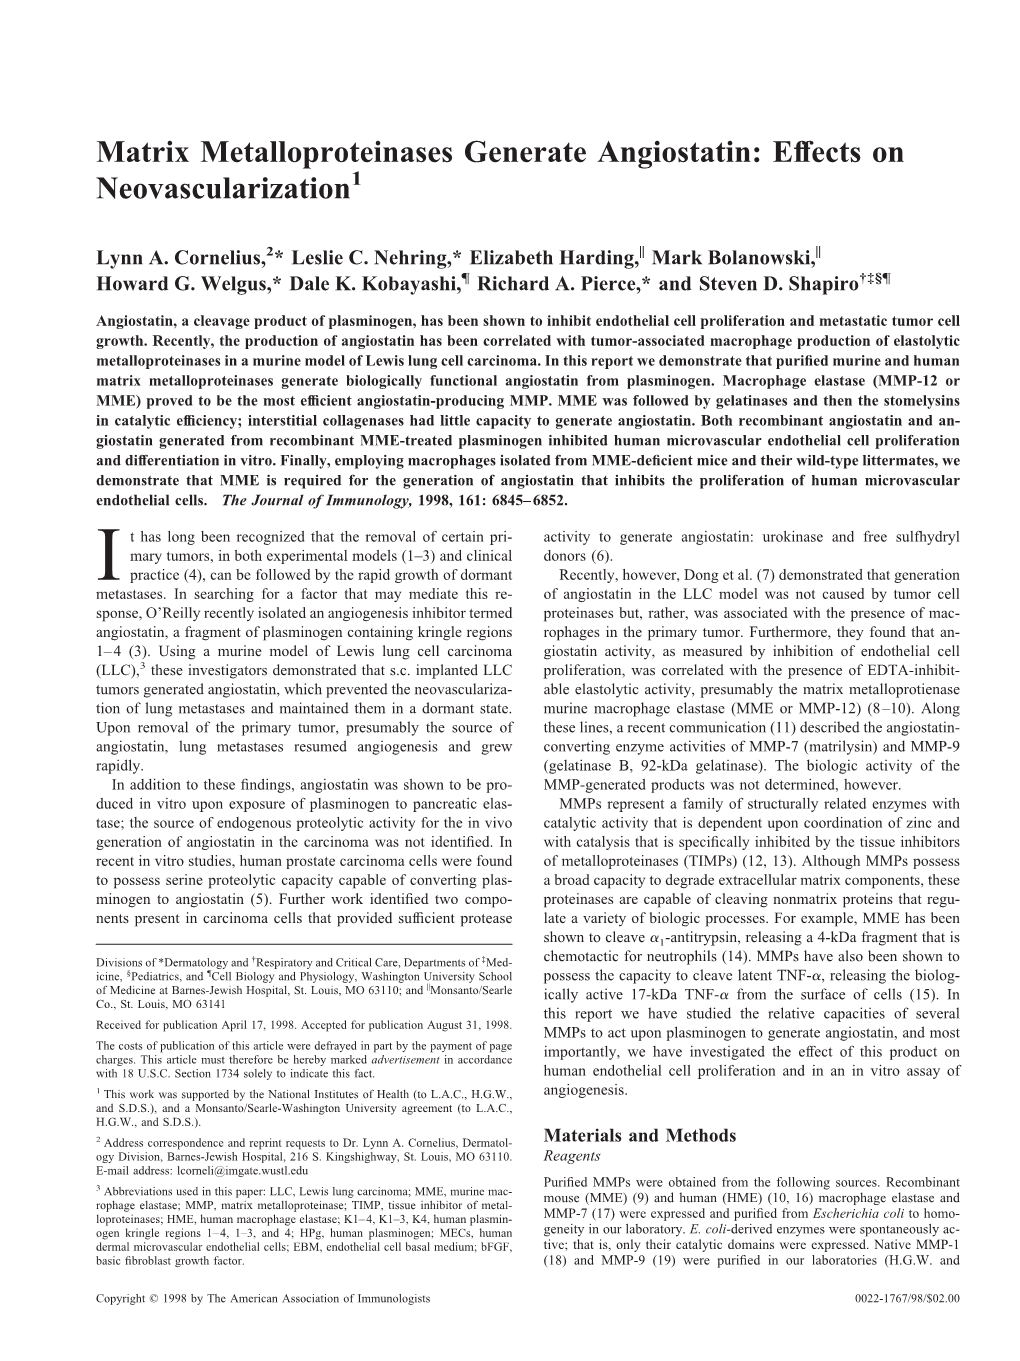 Angiostatin: Effects on Neovascularization1